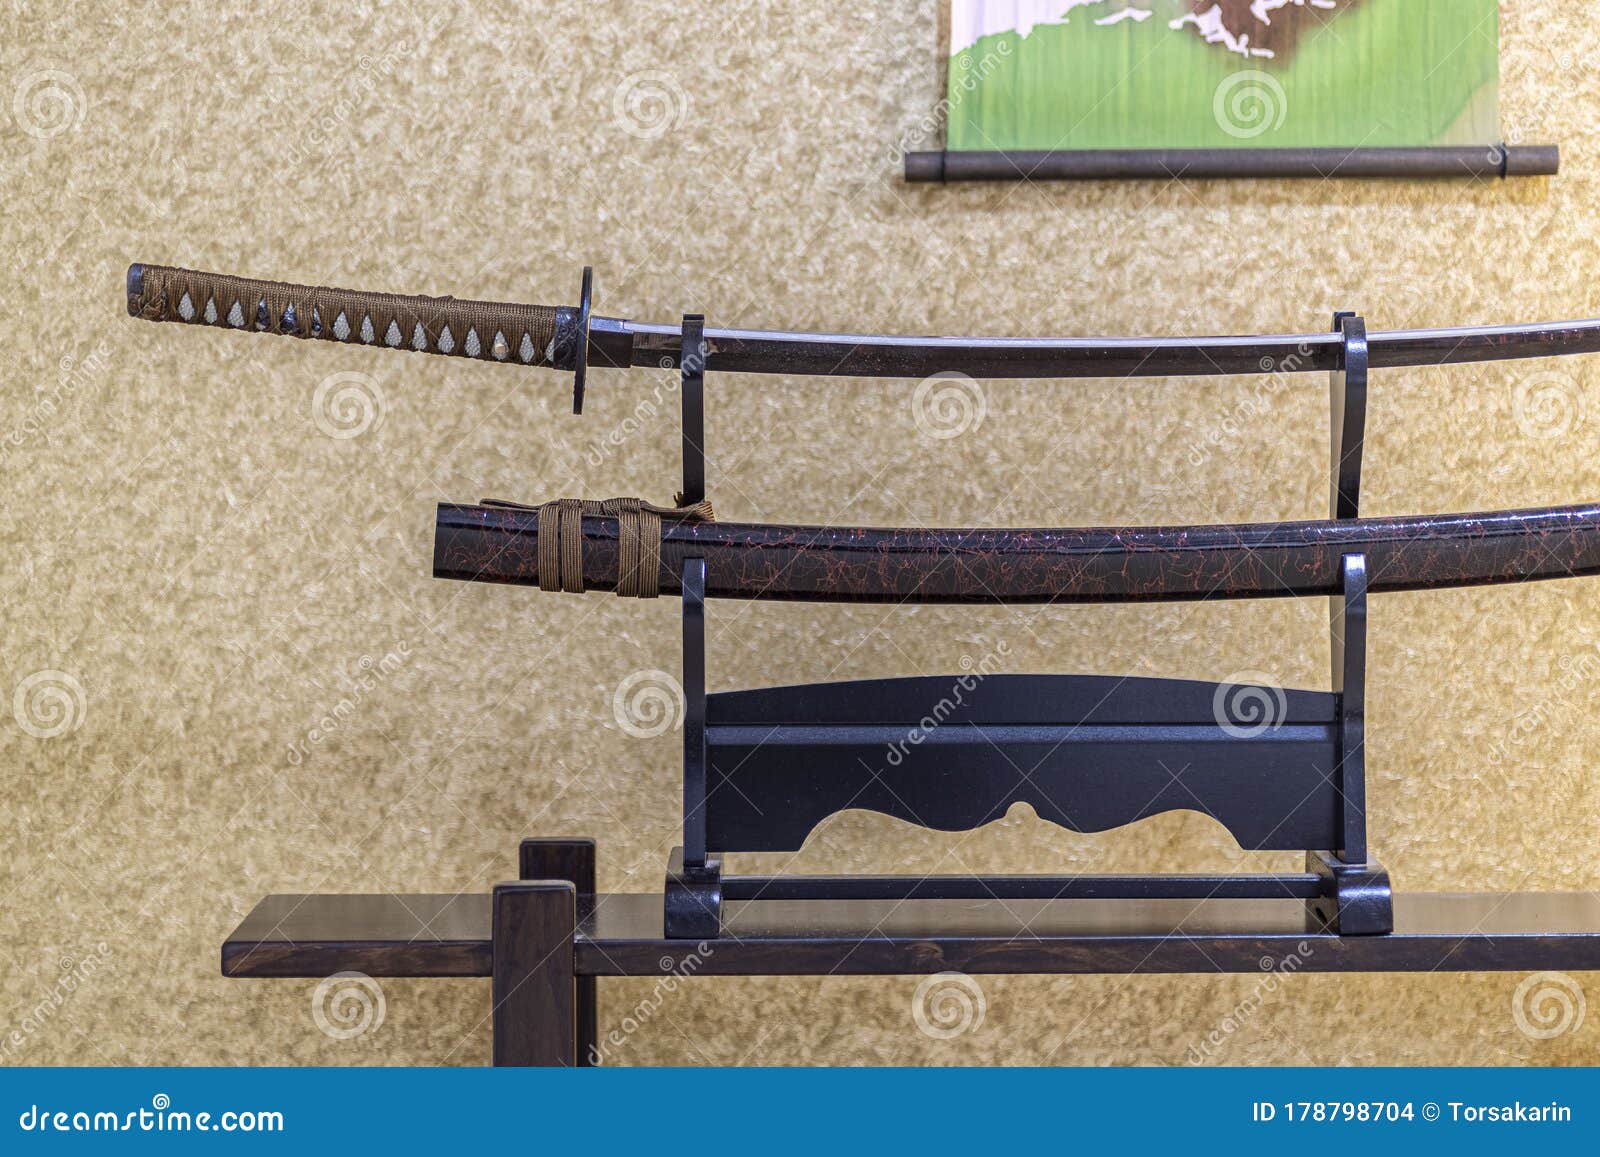 Japanese samurai swords stock photo. Image of assassin - 178798704